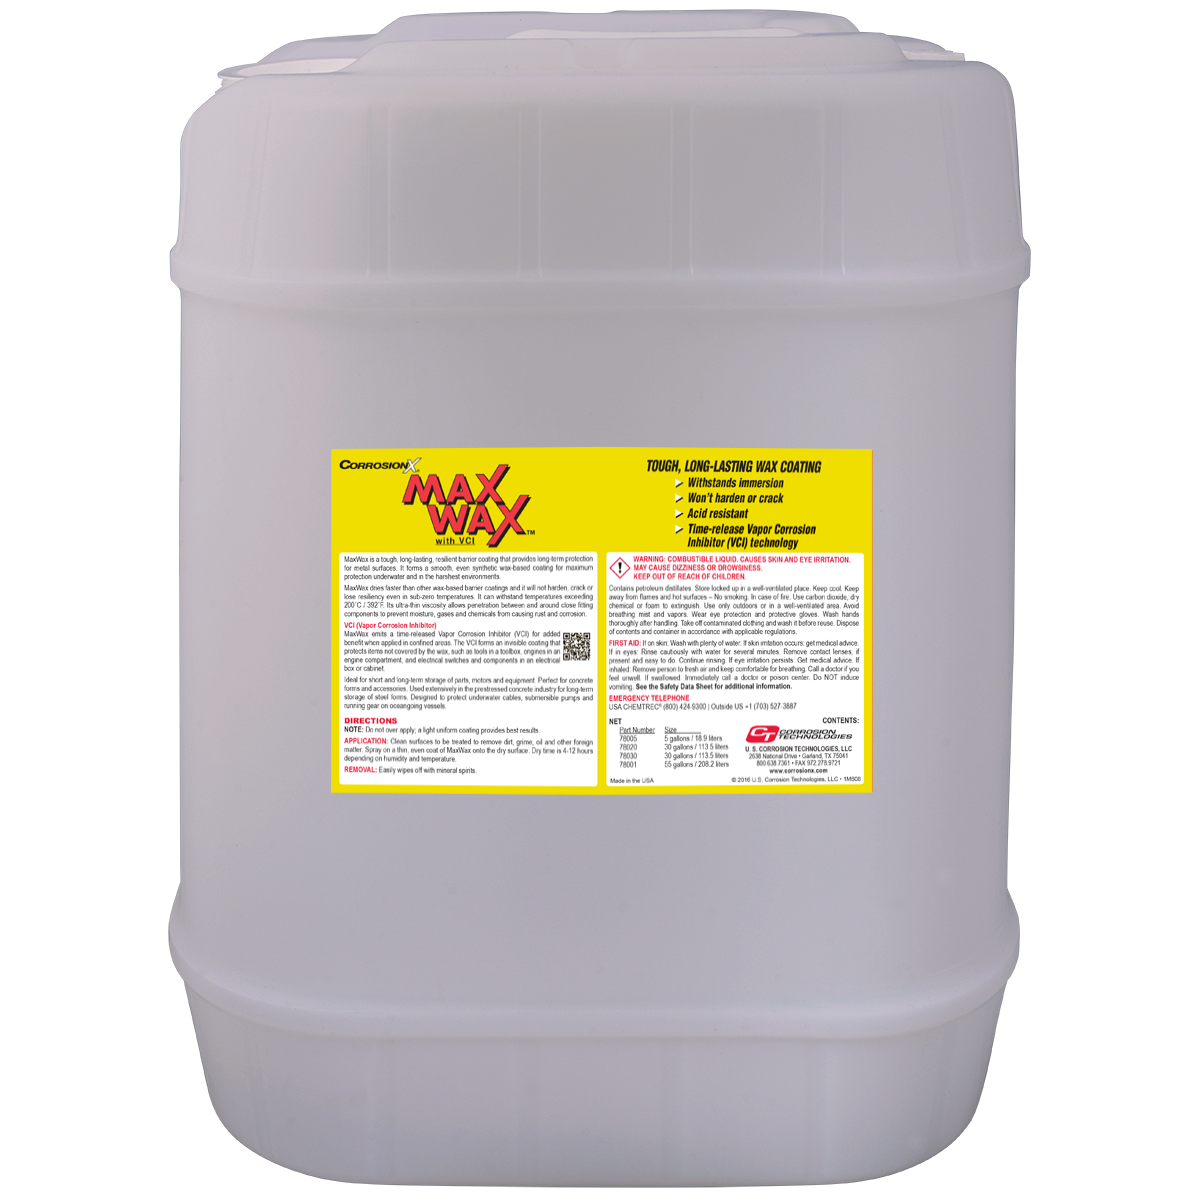 MaxWax dry, long-lasting corrosion preventive coating